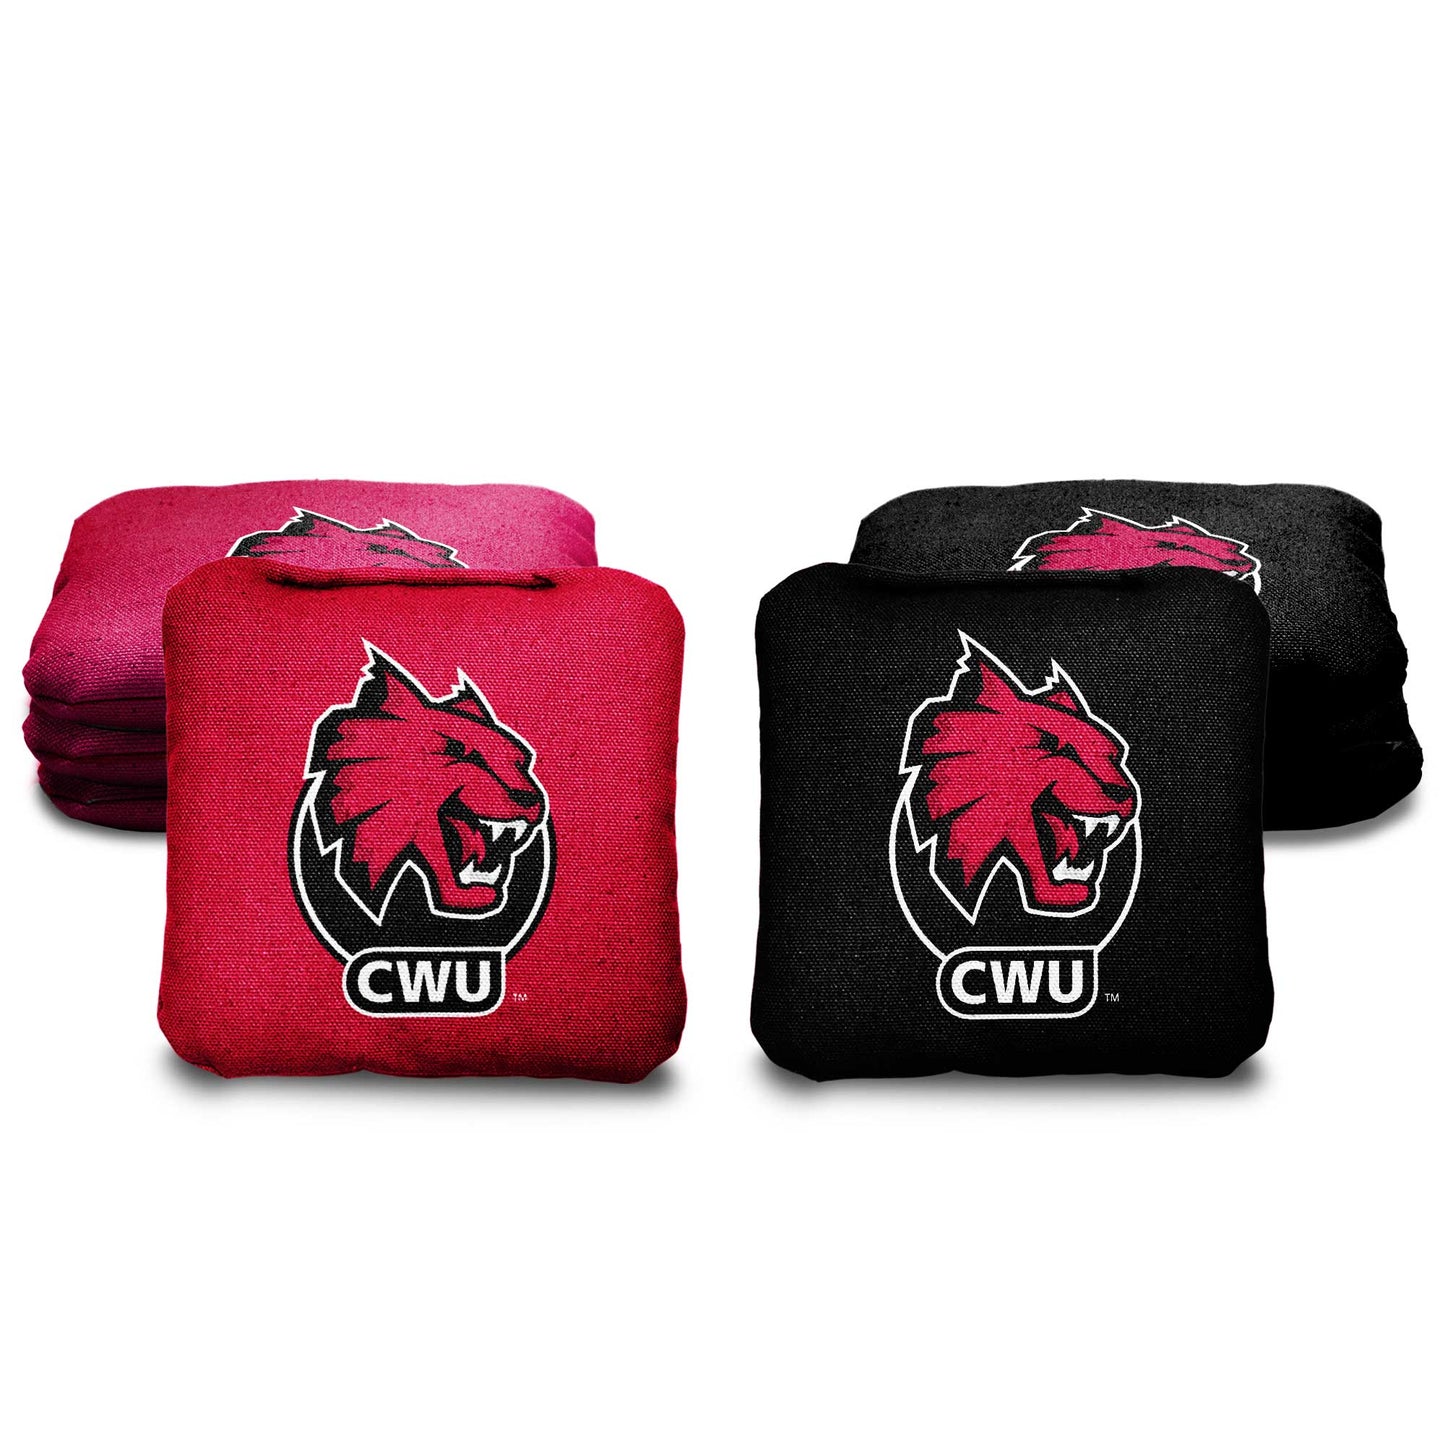 Central Washington University Cornhole Bags - 8 Cornhole Bags